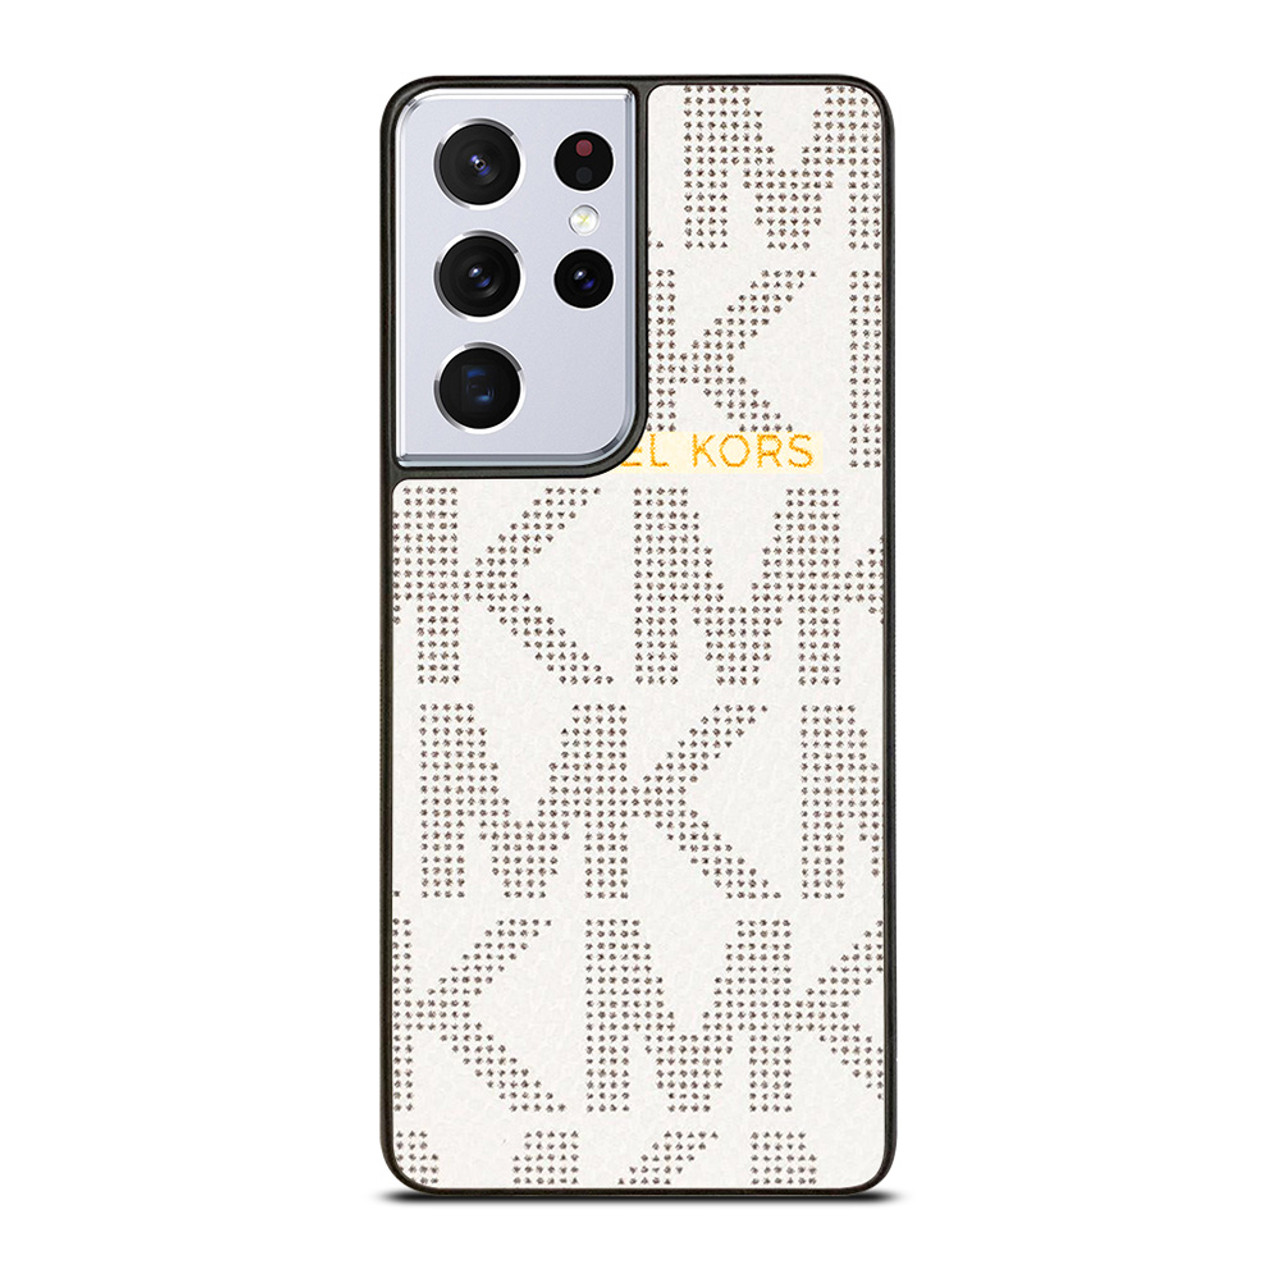 NEW MICHAEL KORS ELECTRONICS MK SIGNATURE PLASTIC iPHONE 5 CASE,COVER+BOX